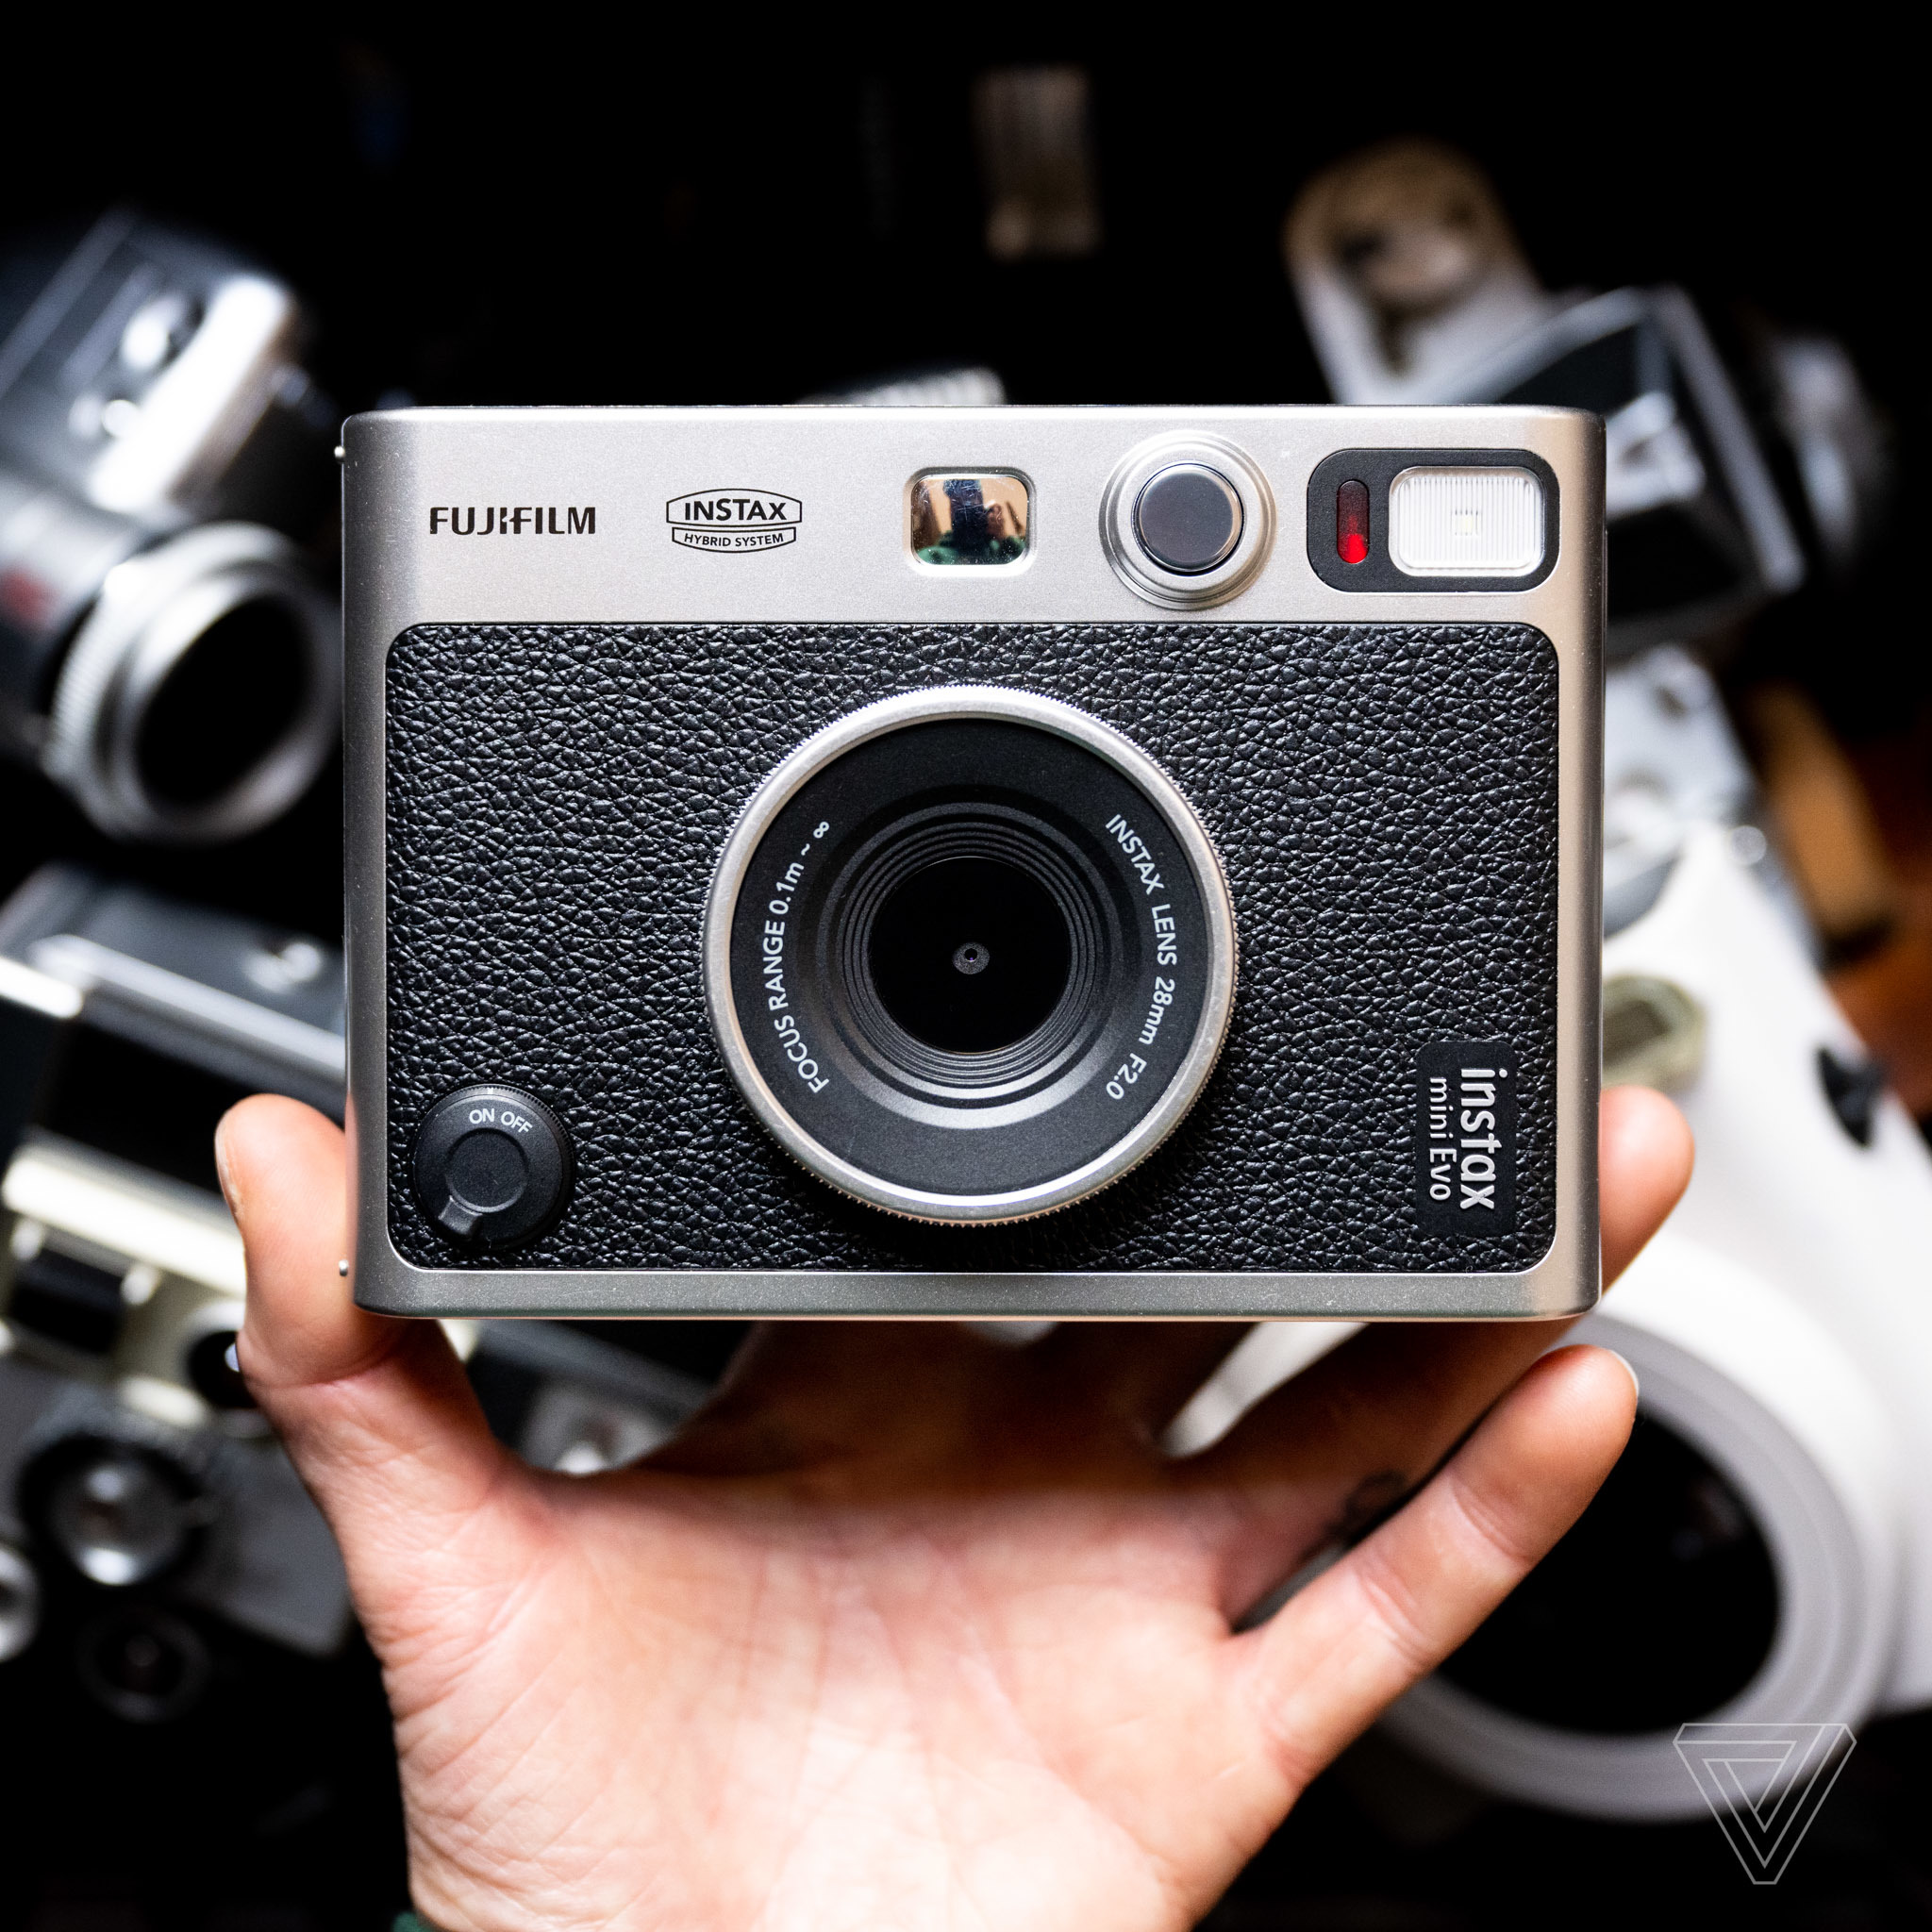 stap in Occlusie Verloren Fujifilm Instax Mini Evo review: more camera than toy - The Verge